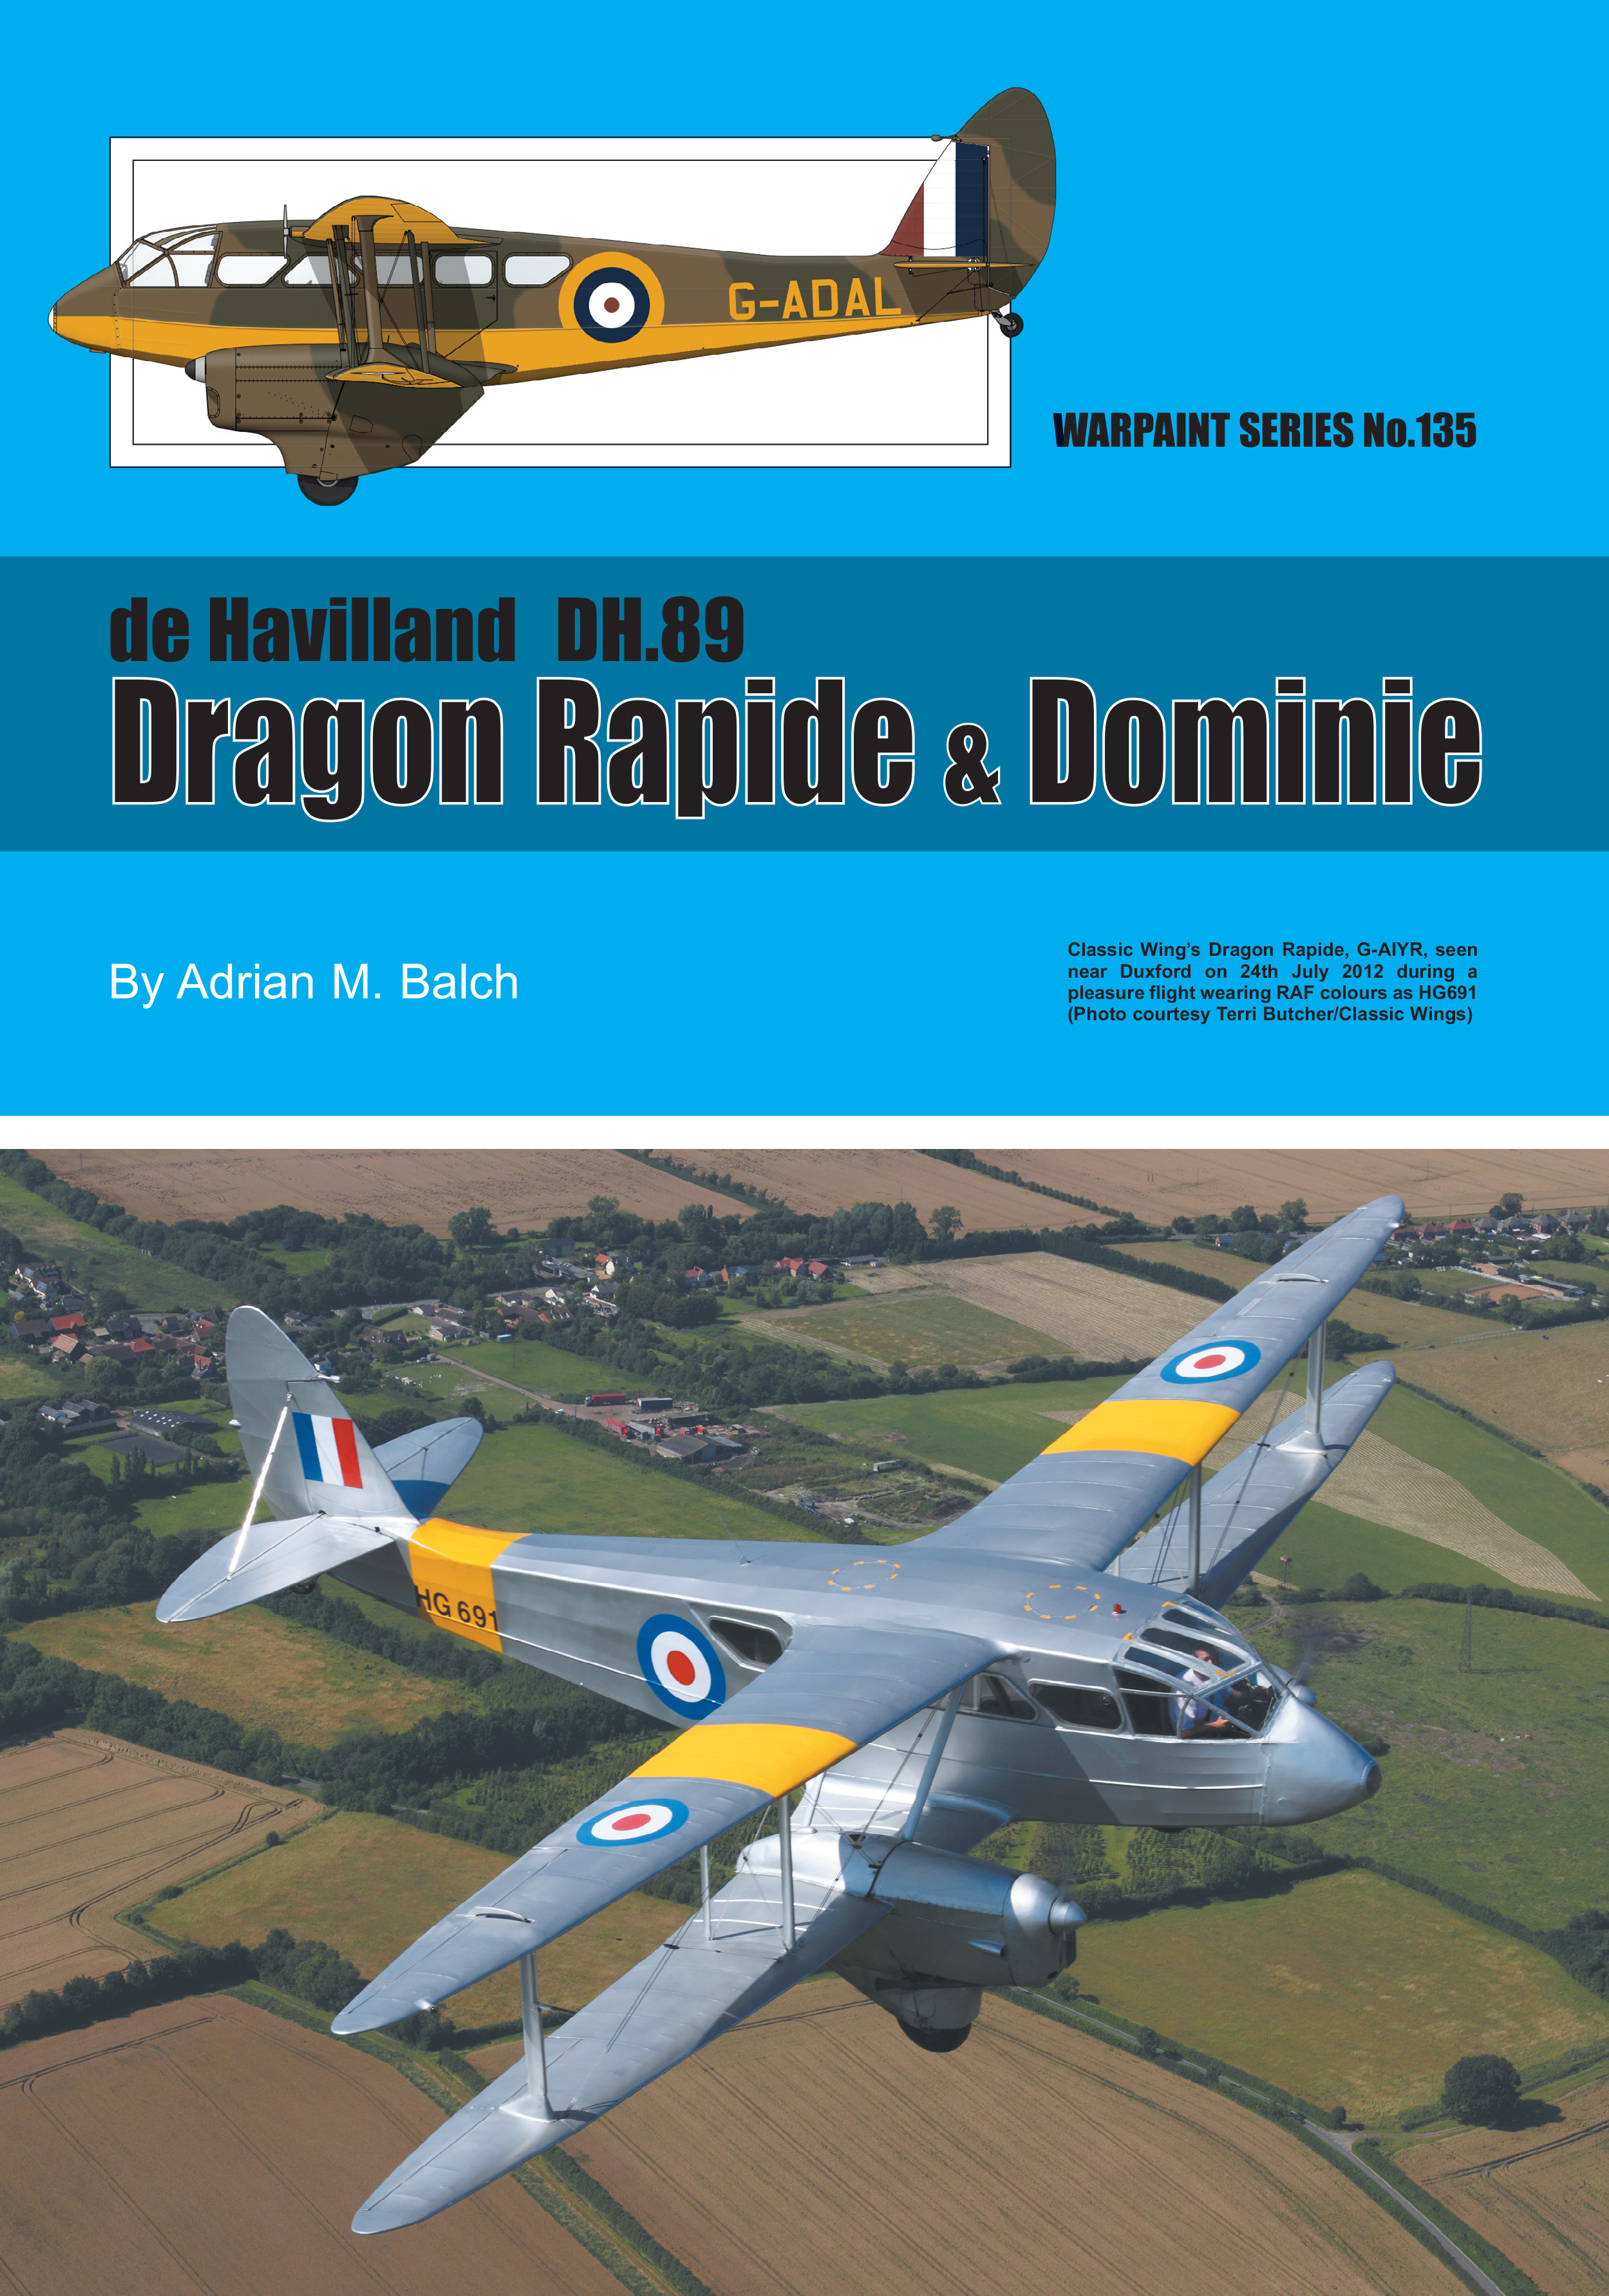 Guideline Publications Ltd Warpaint 135 DH.89 Dragon Rapide By Adrian Balch 